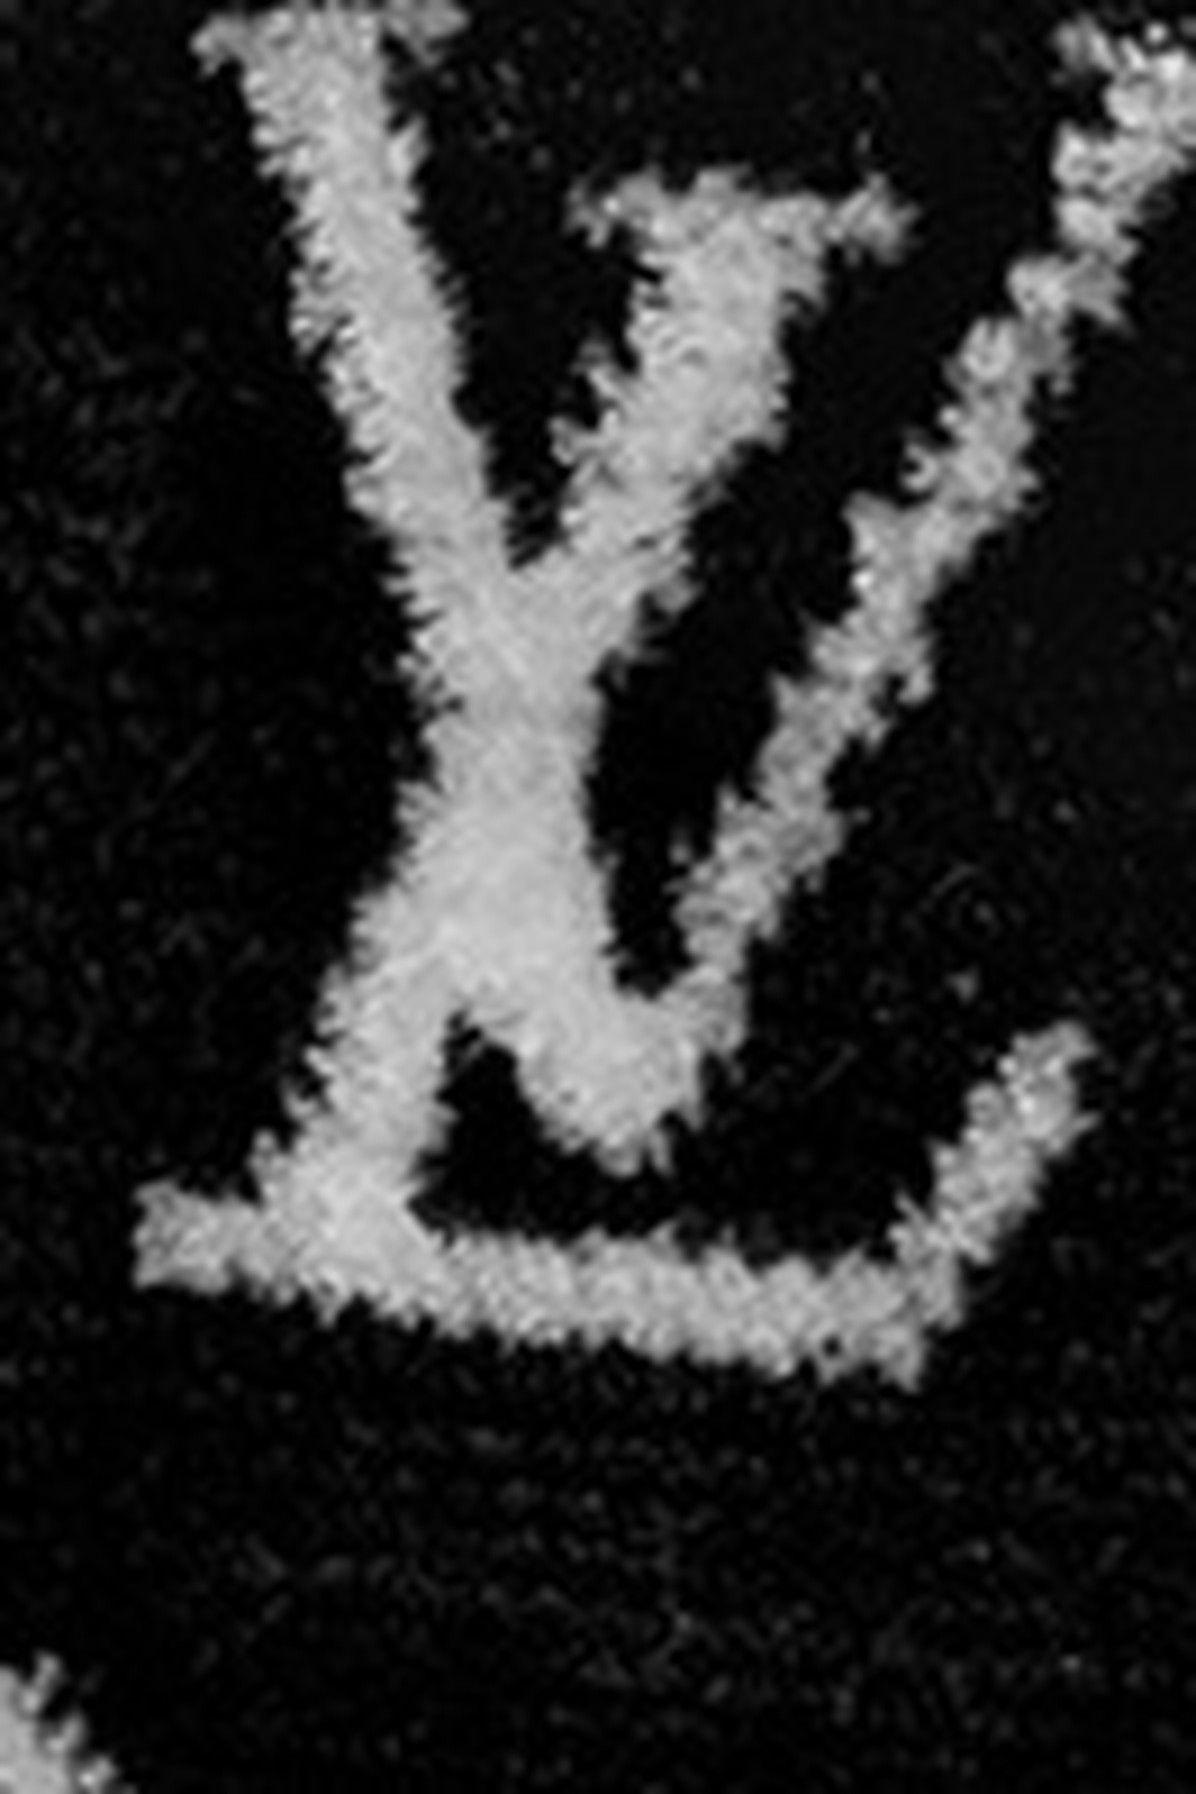 LOUIS VUITTON Technical Fabric Calfskin Monogram Stellar Sneakers 40 Black  1254291